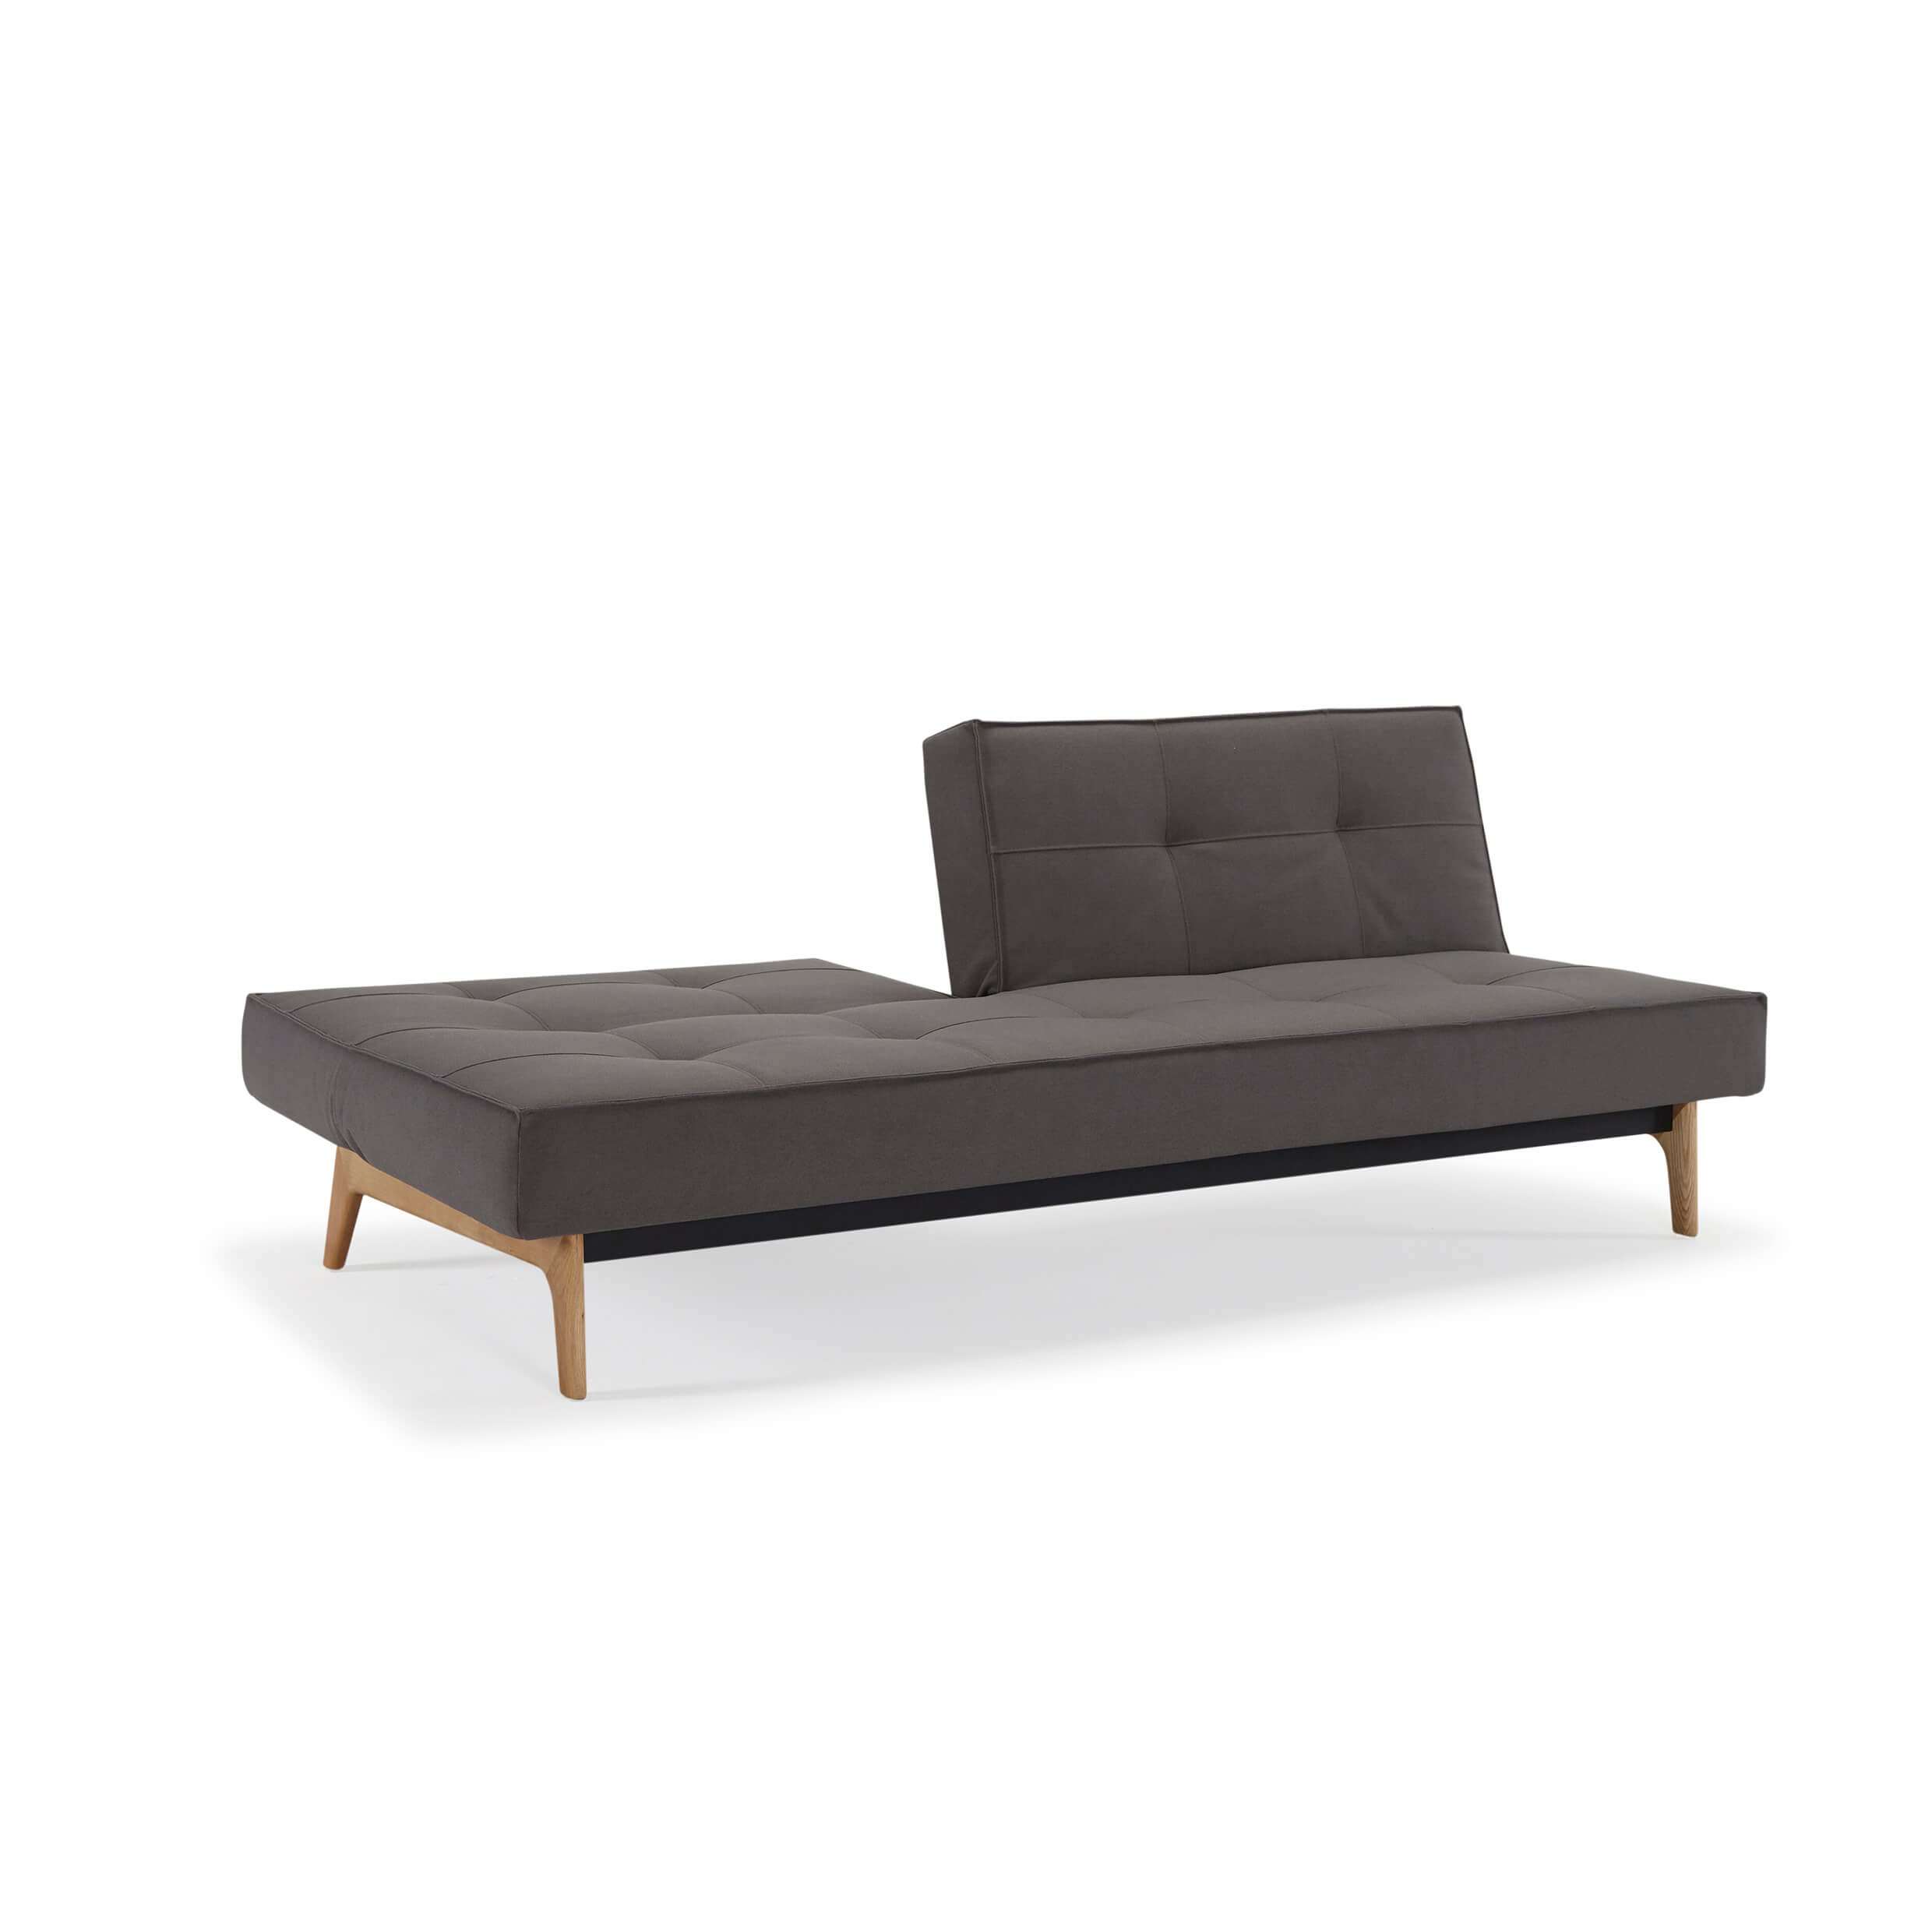 Convertible futon sofa half folded view